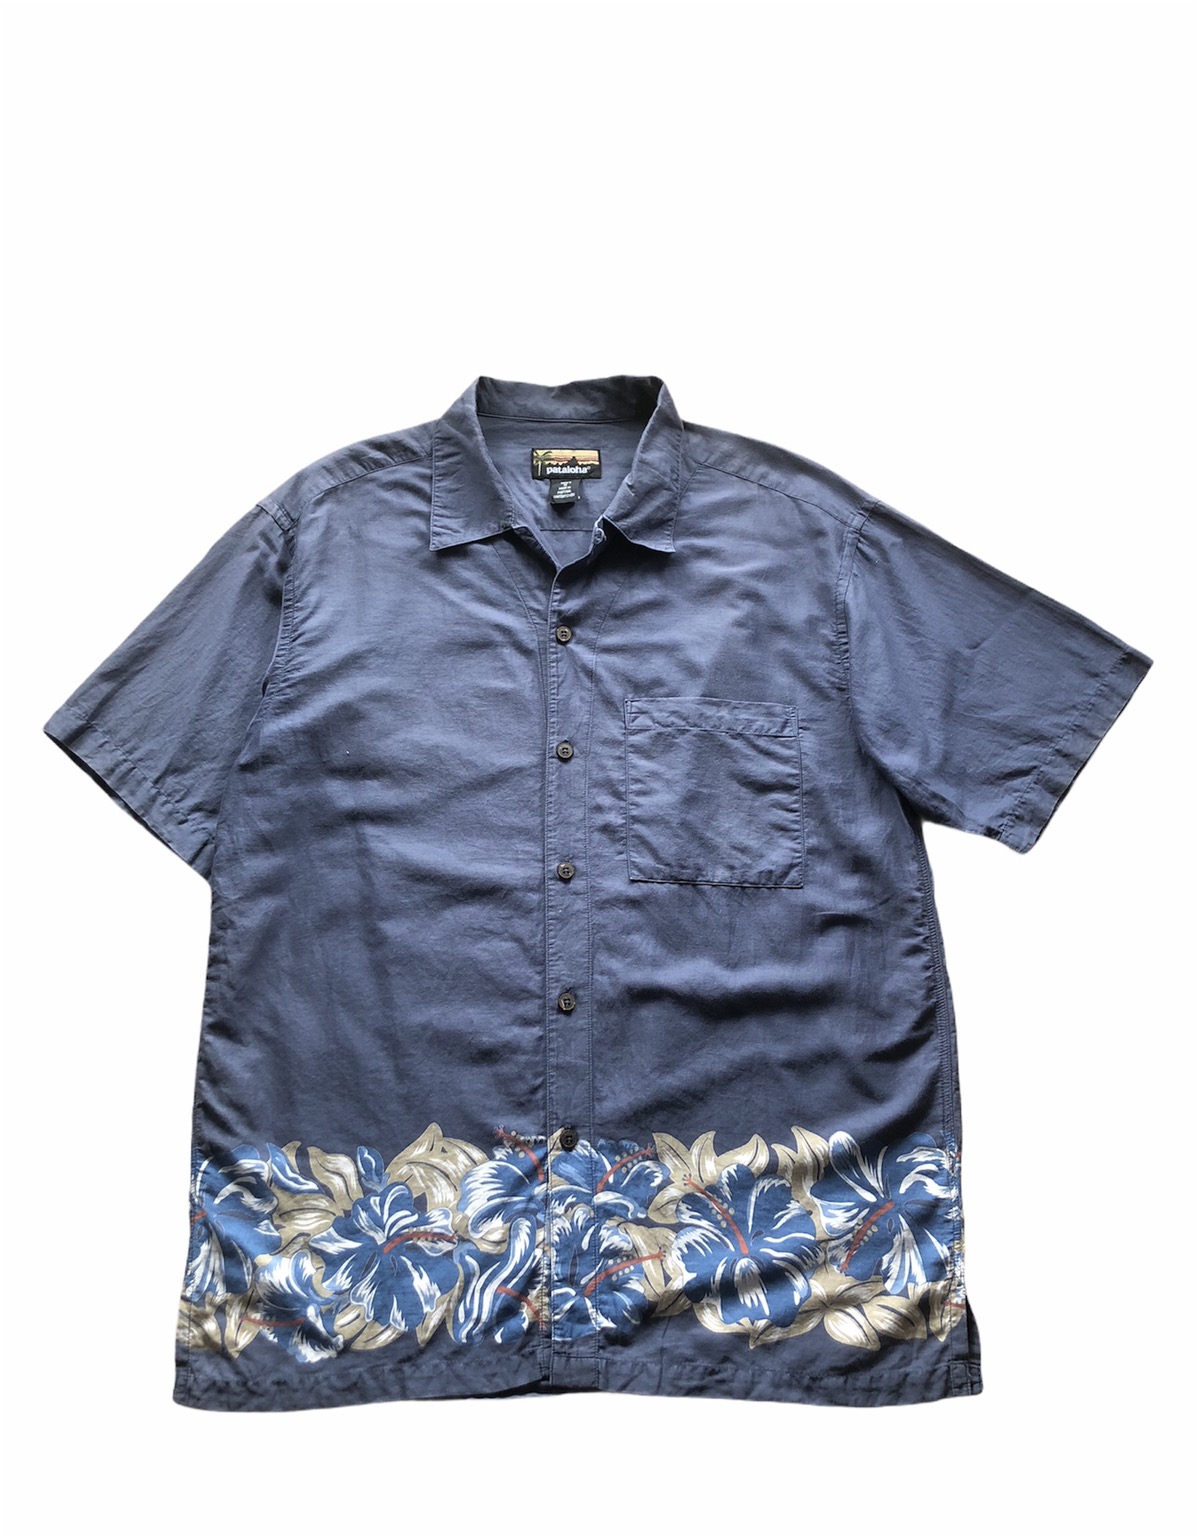 Vintage 80s Pataloha Hawaian surf Cotton shirt - 1